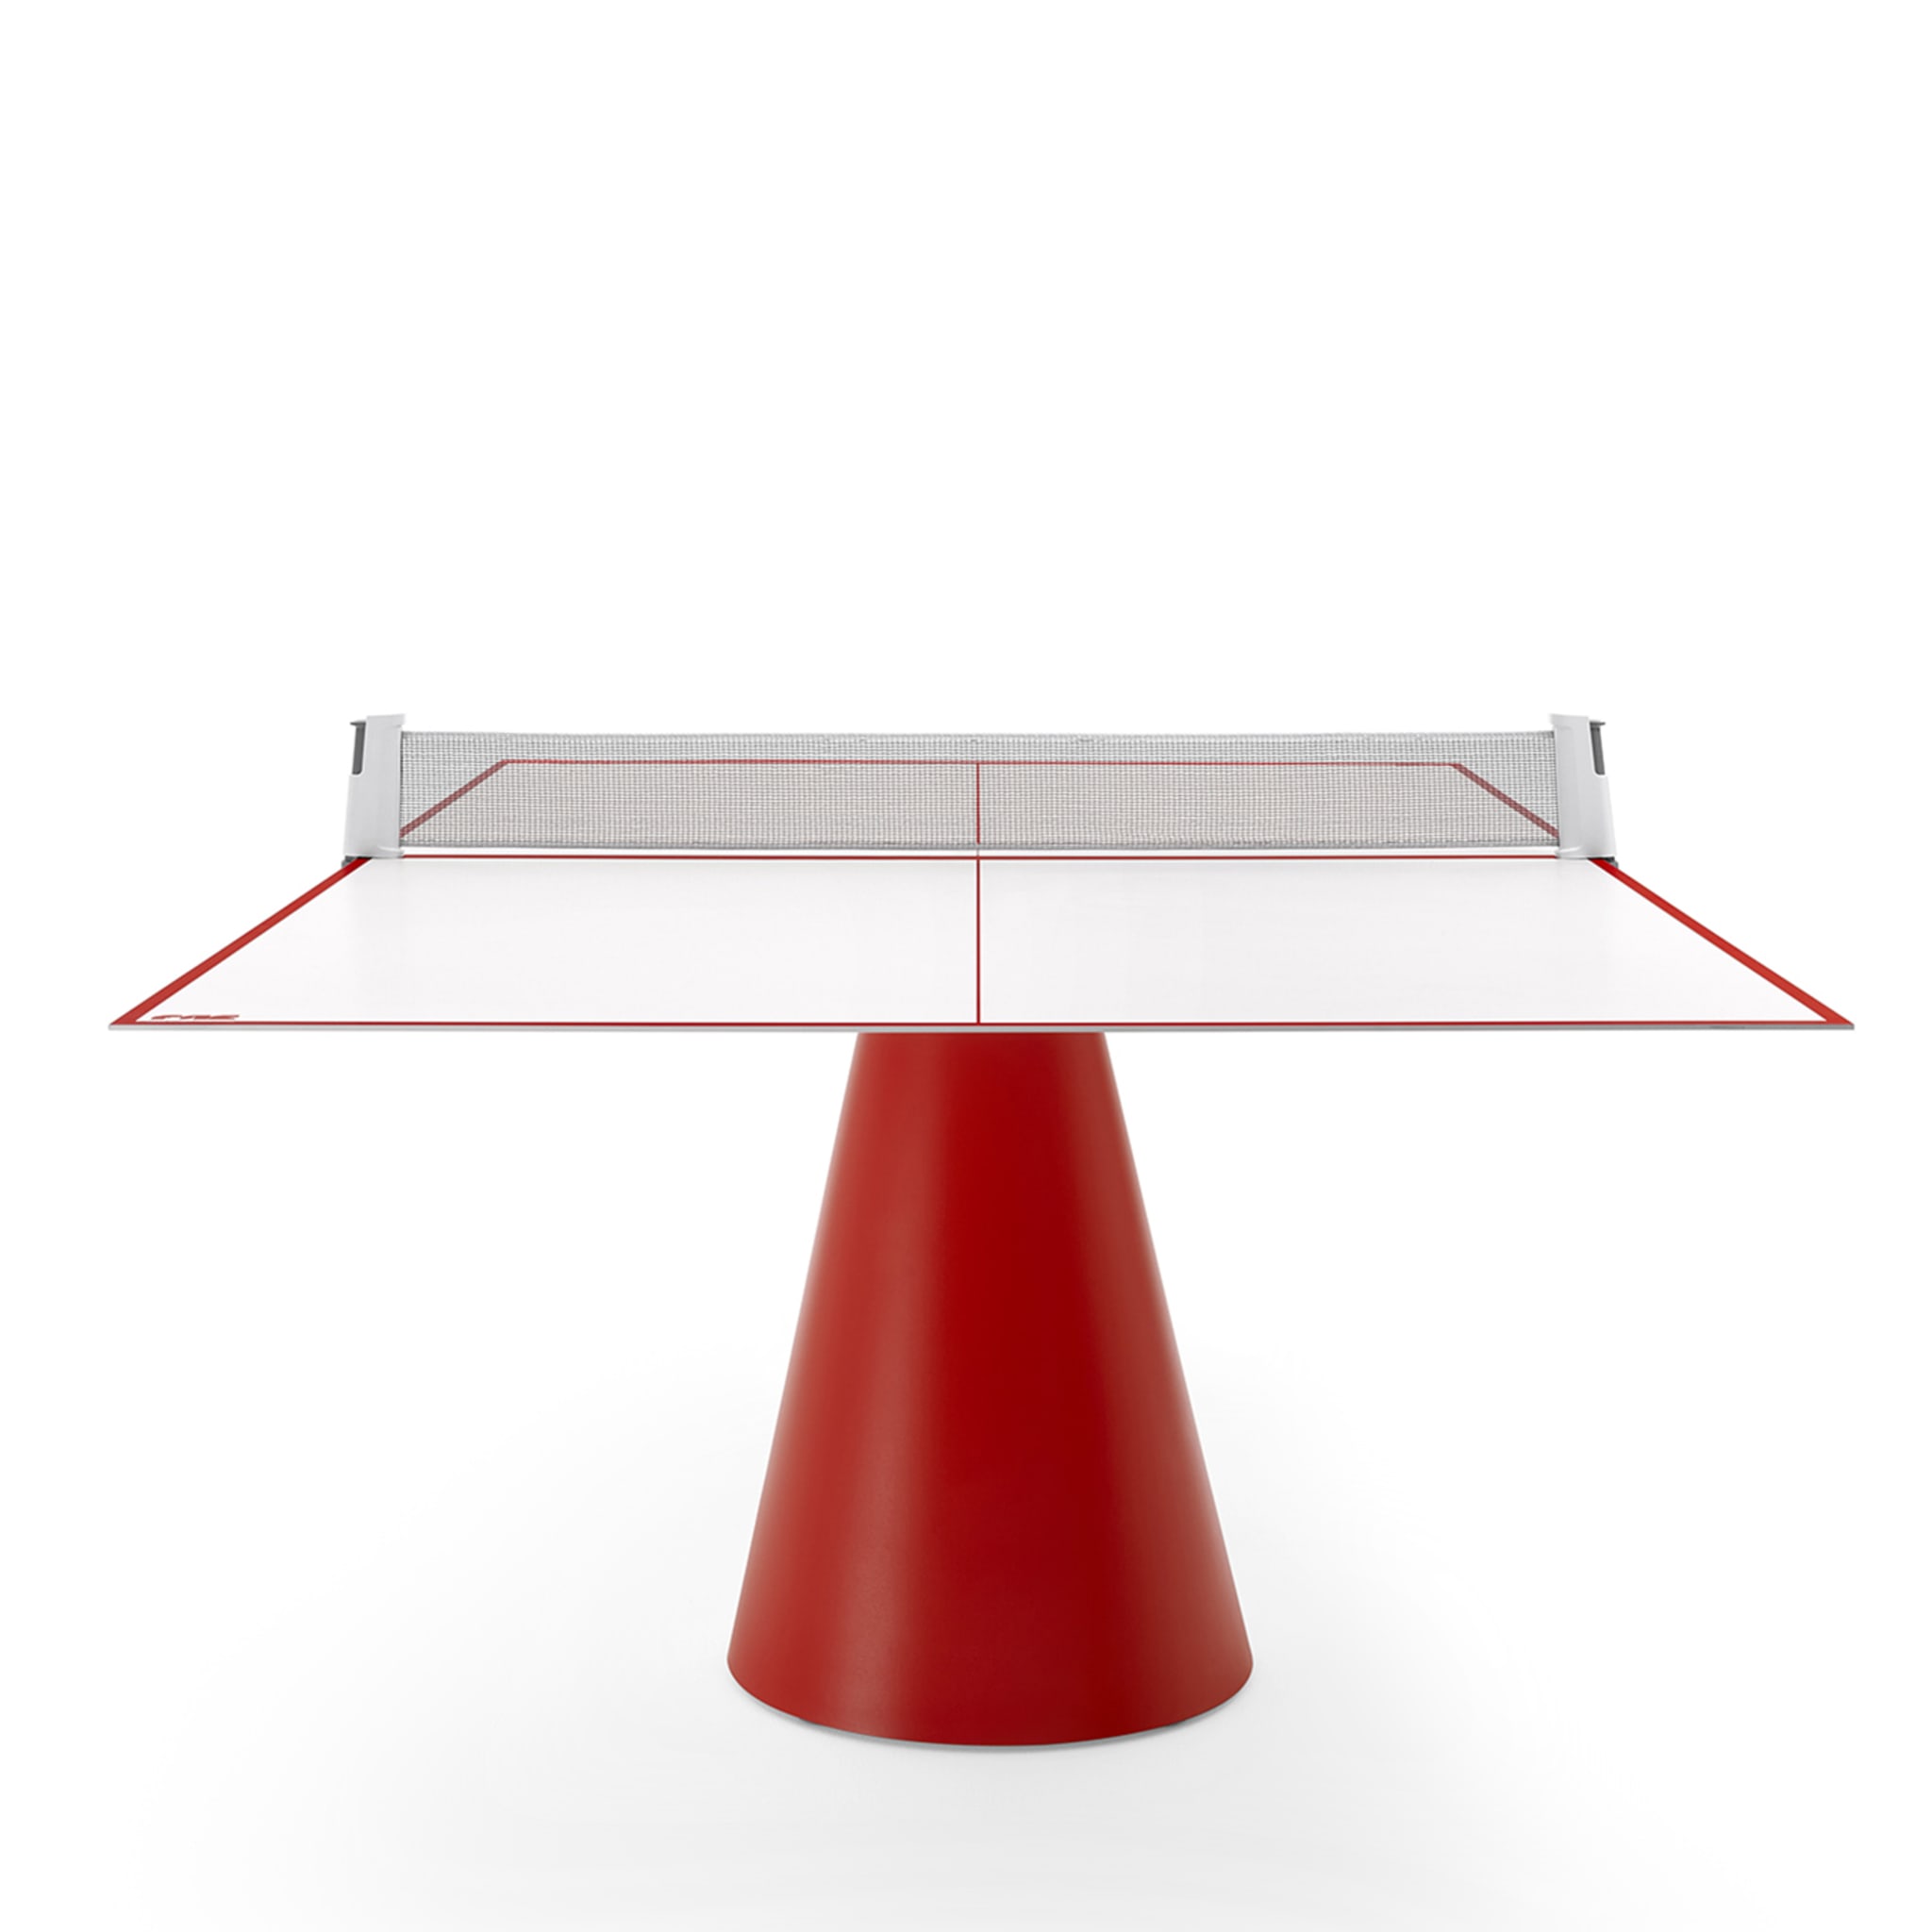 Dada Outdoor Red Ping Pong Table by Basaglia + Rota Nodari - Alternative view 2